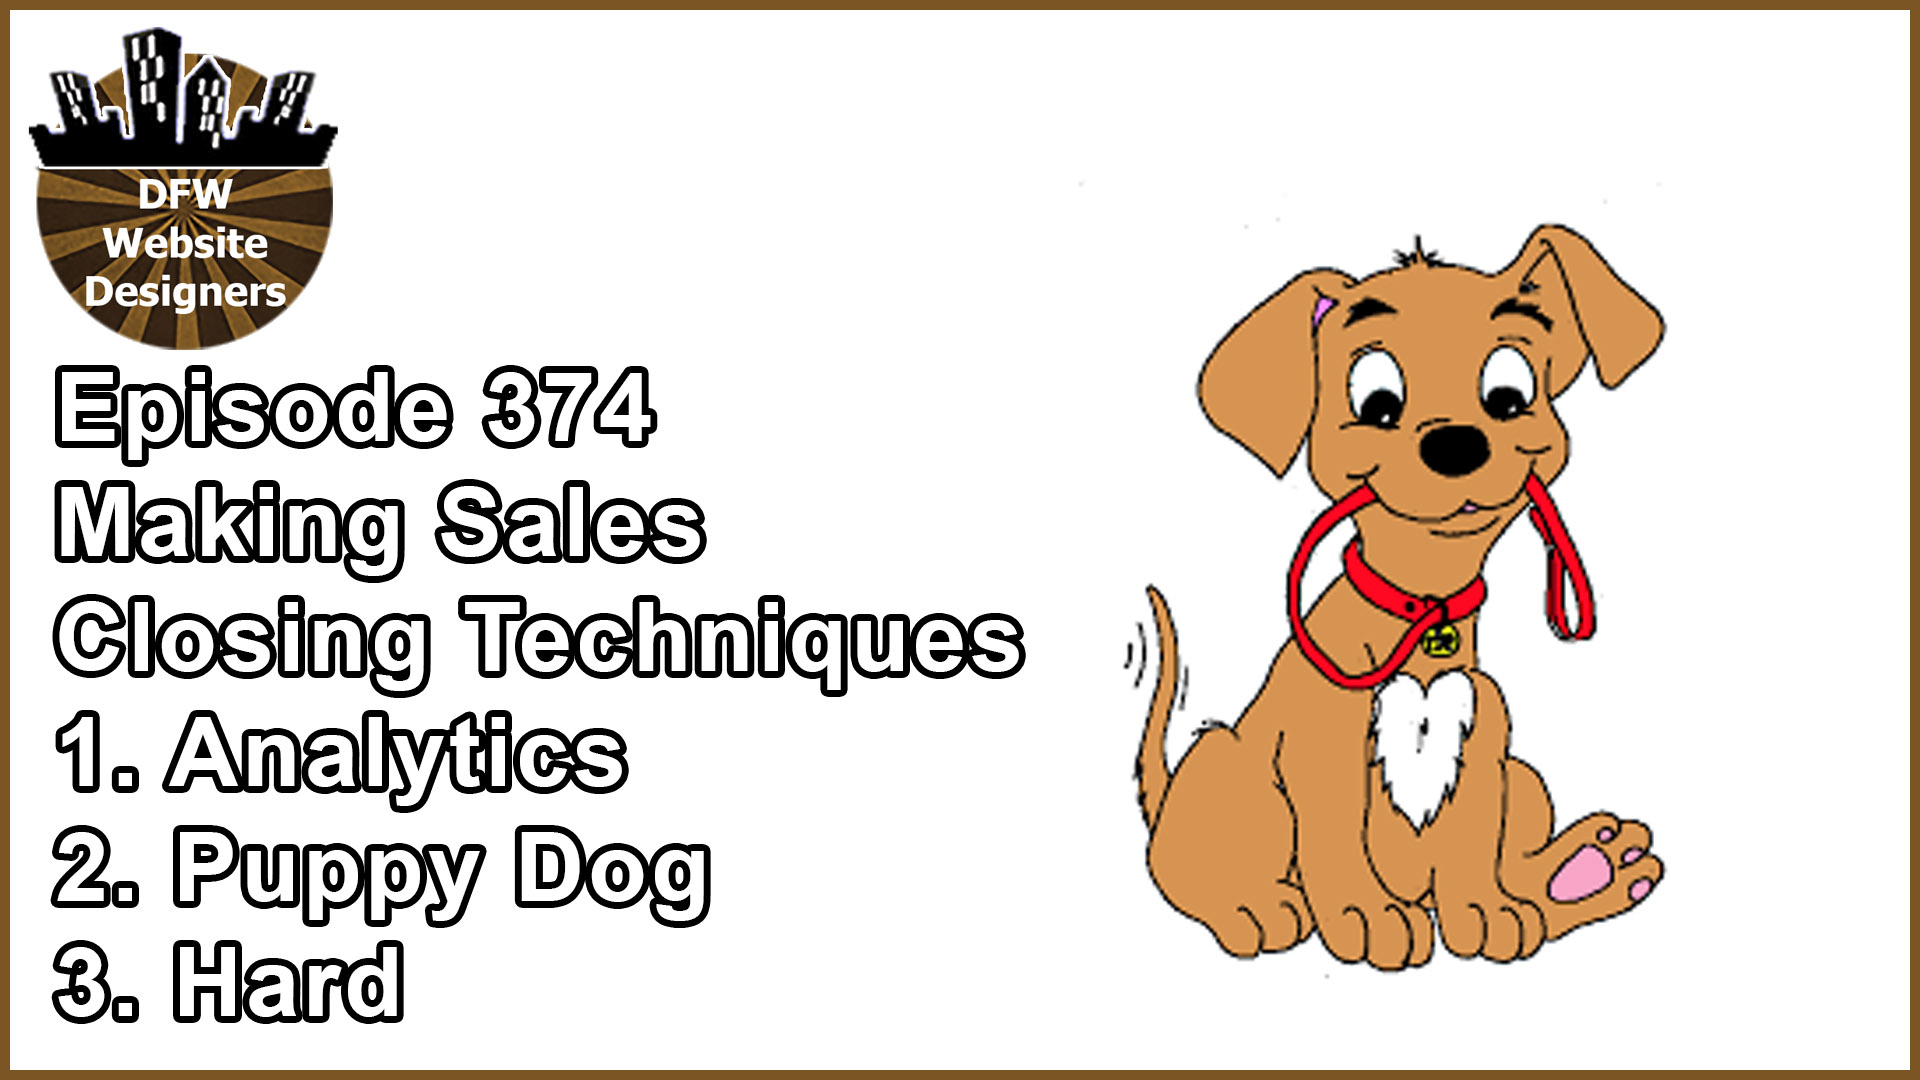 Episode 374 Making Sales Pt7 Closing: Analytics, Puppy Dog, Hard Close